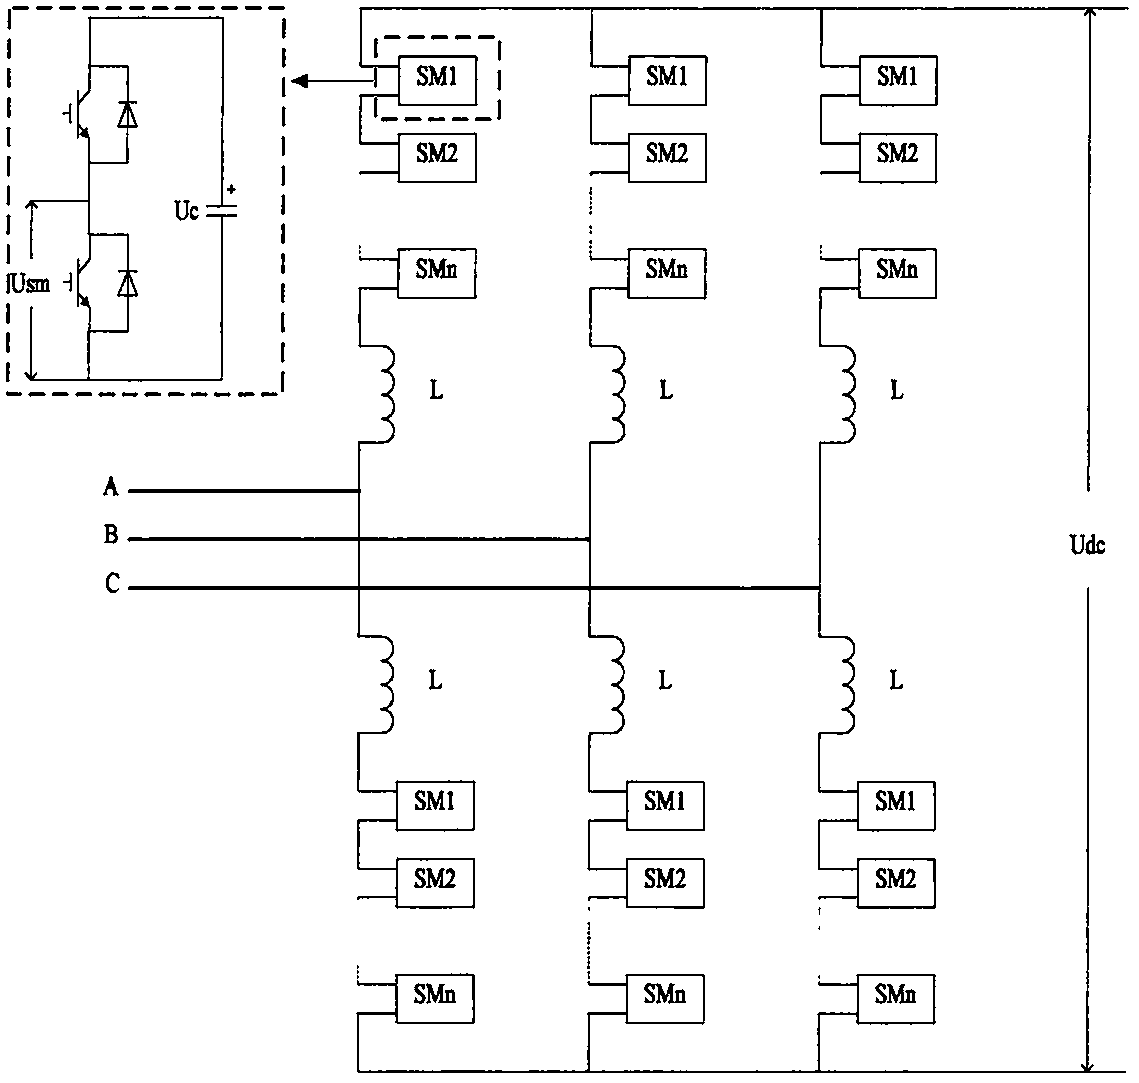 Sliding mode control-based MMC (Modular Multi-Level Converter) circulating current suppression method